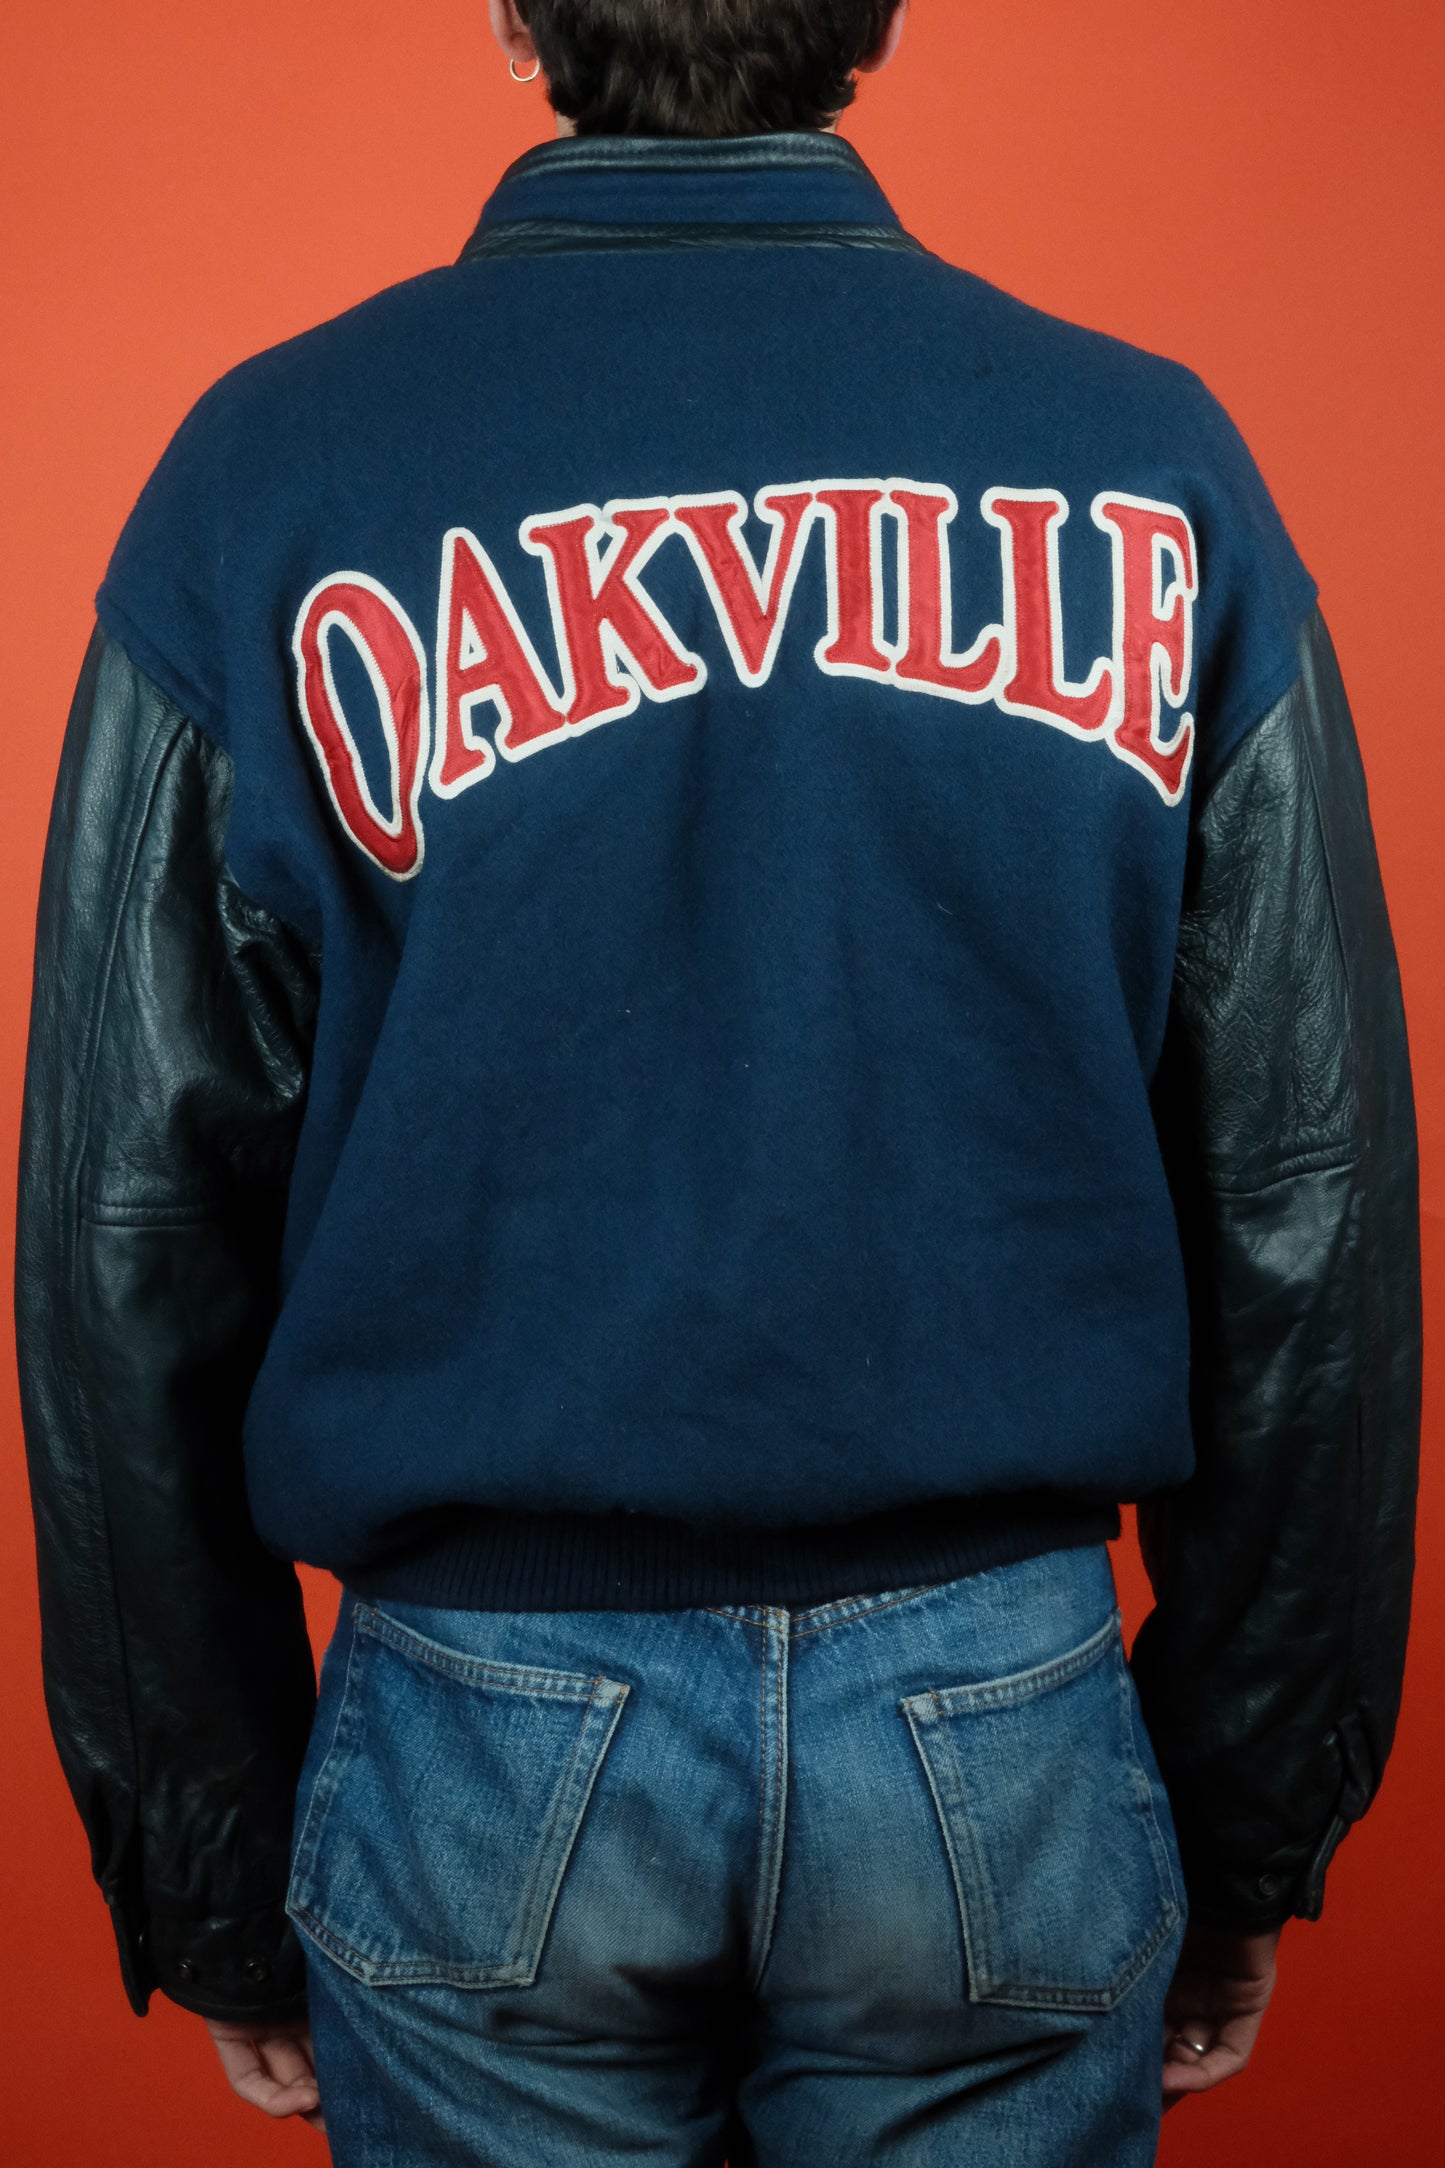 Varsity Jacket 'Oakville Rangers' L - vintage clothing clochard92.com